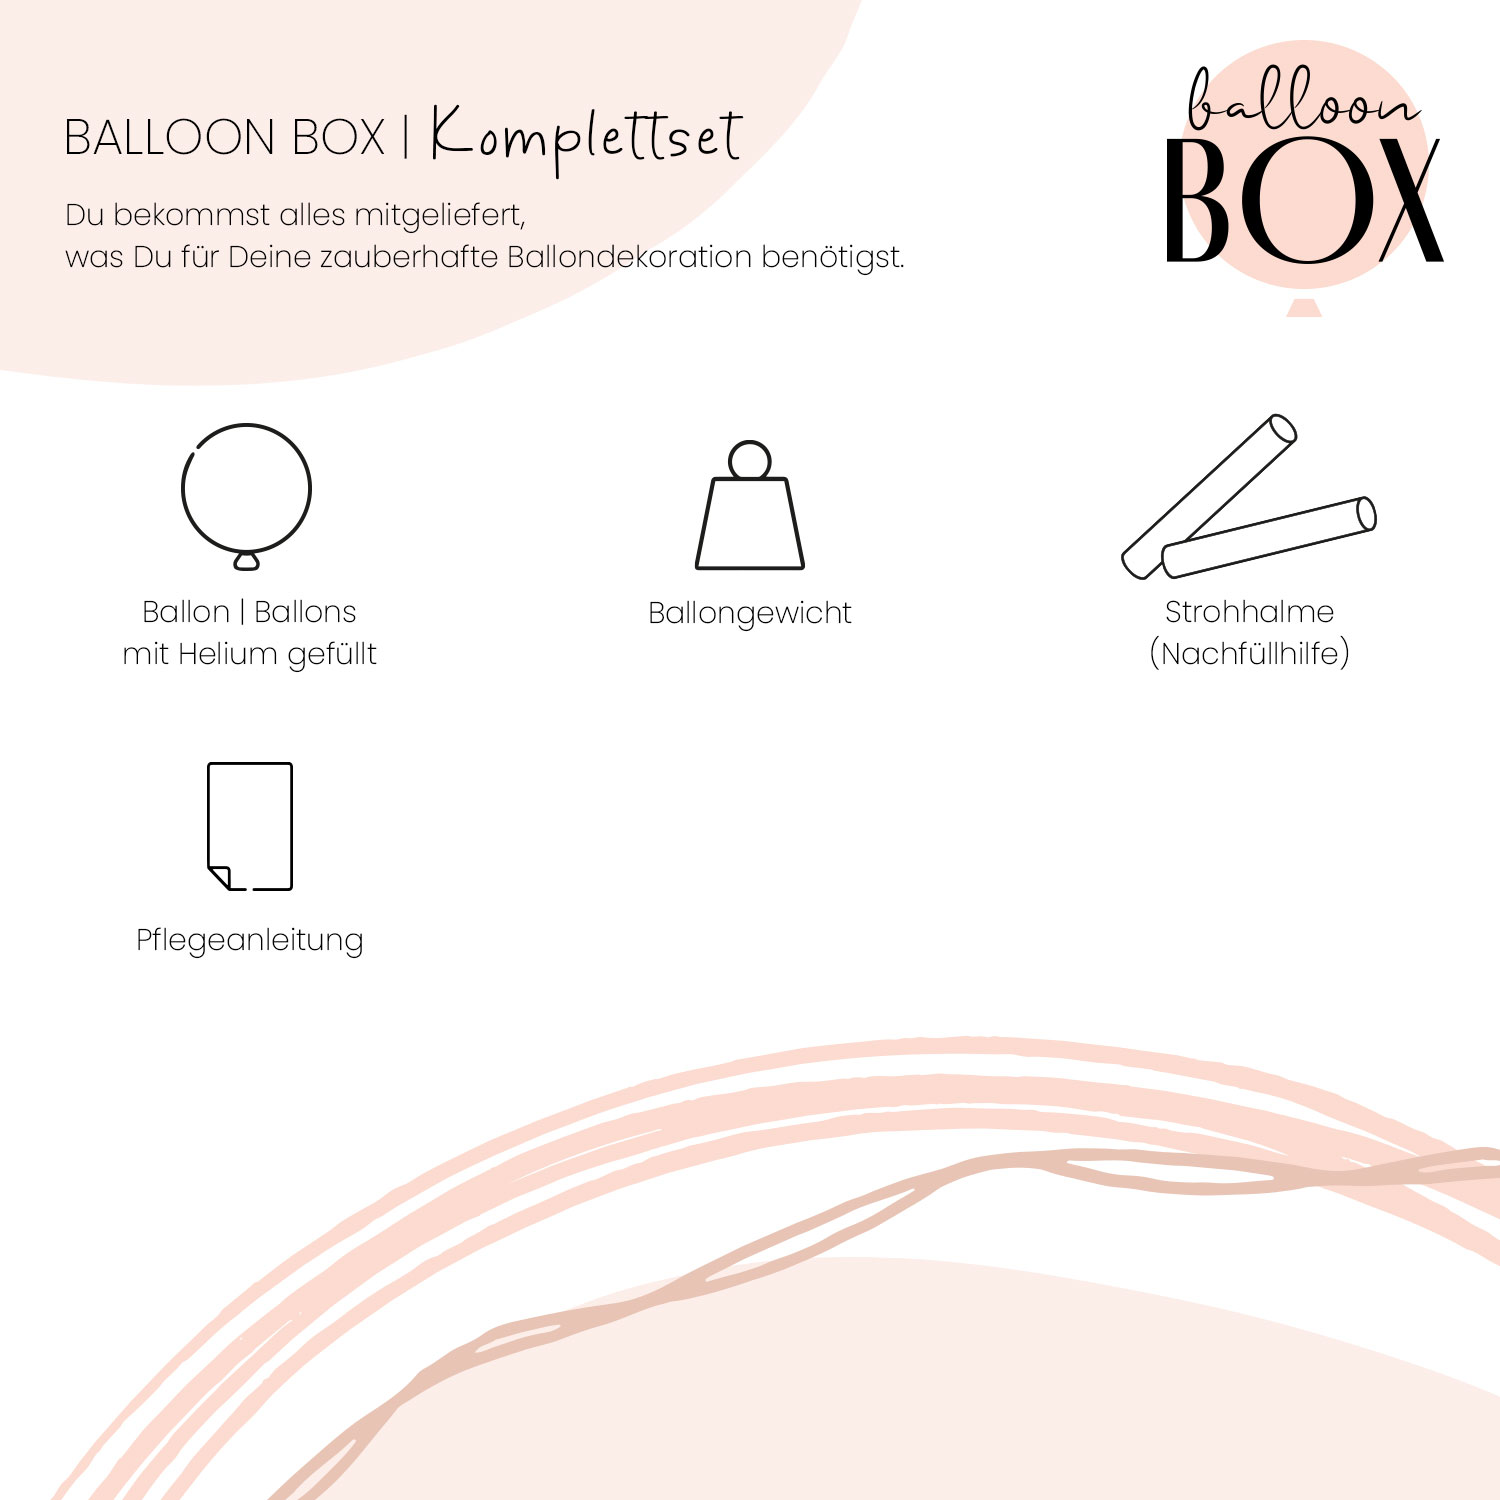 Heliumballon in a Box - In guten wie in schlechten Zeiten